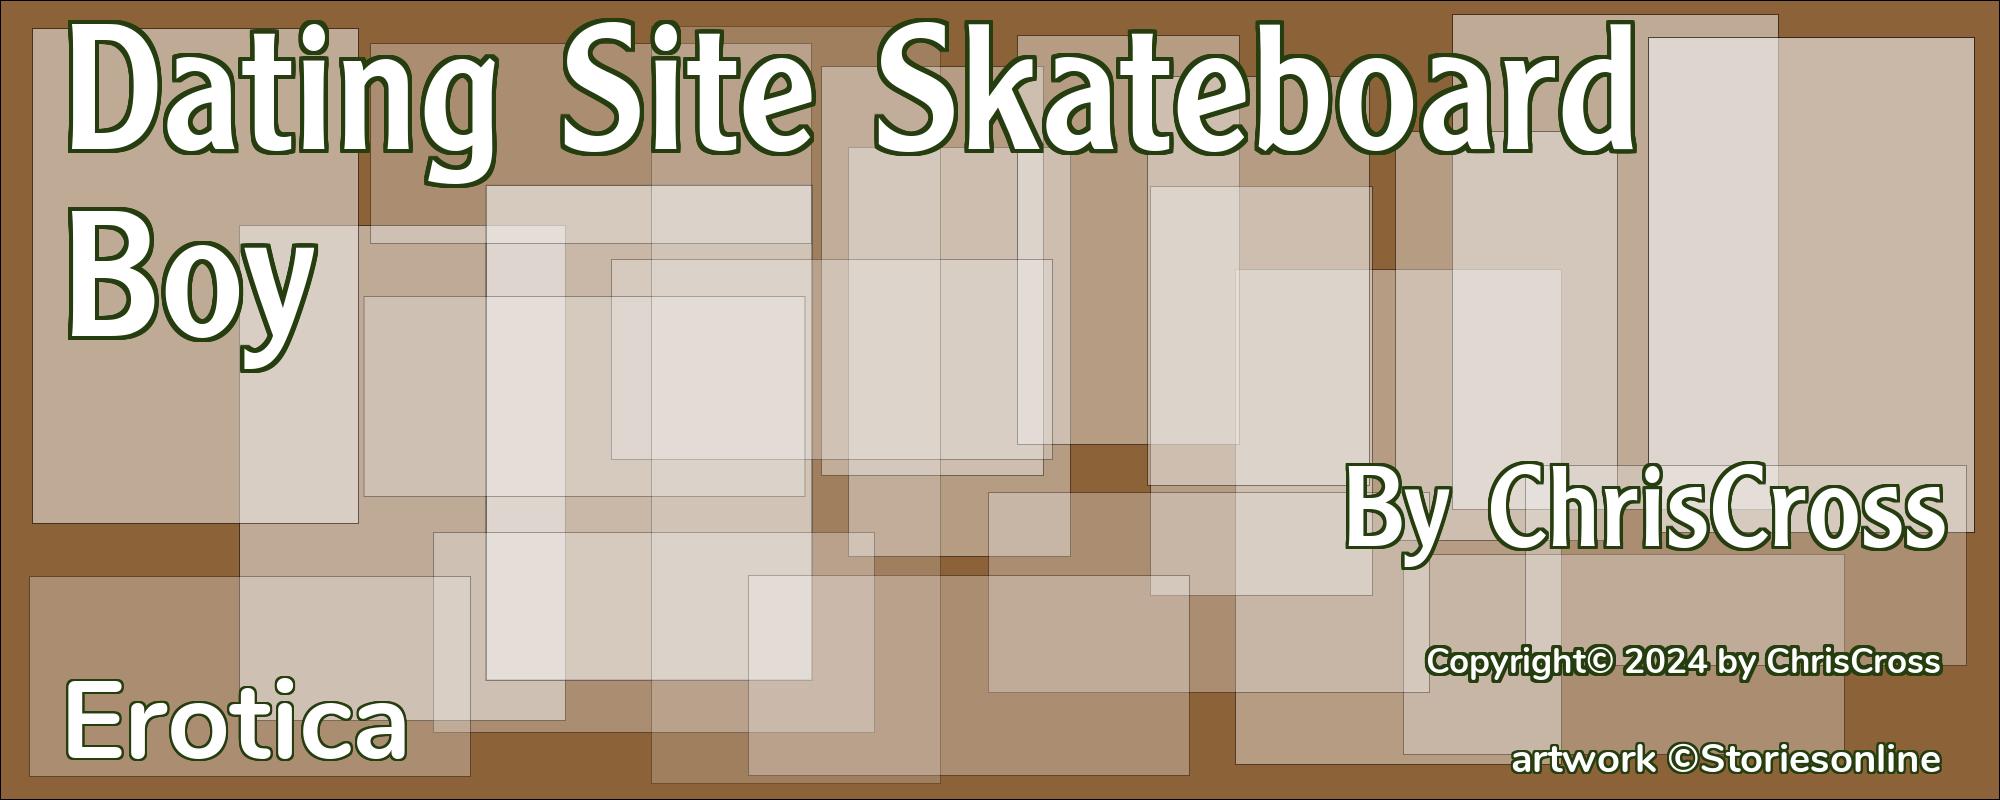 Dating Site Skateboard Boy - Cover